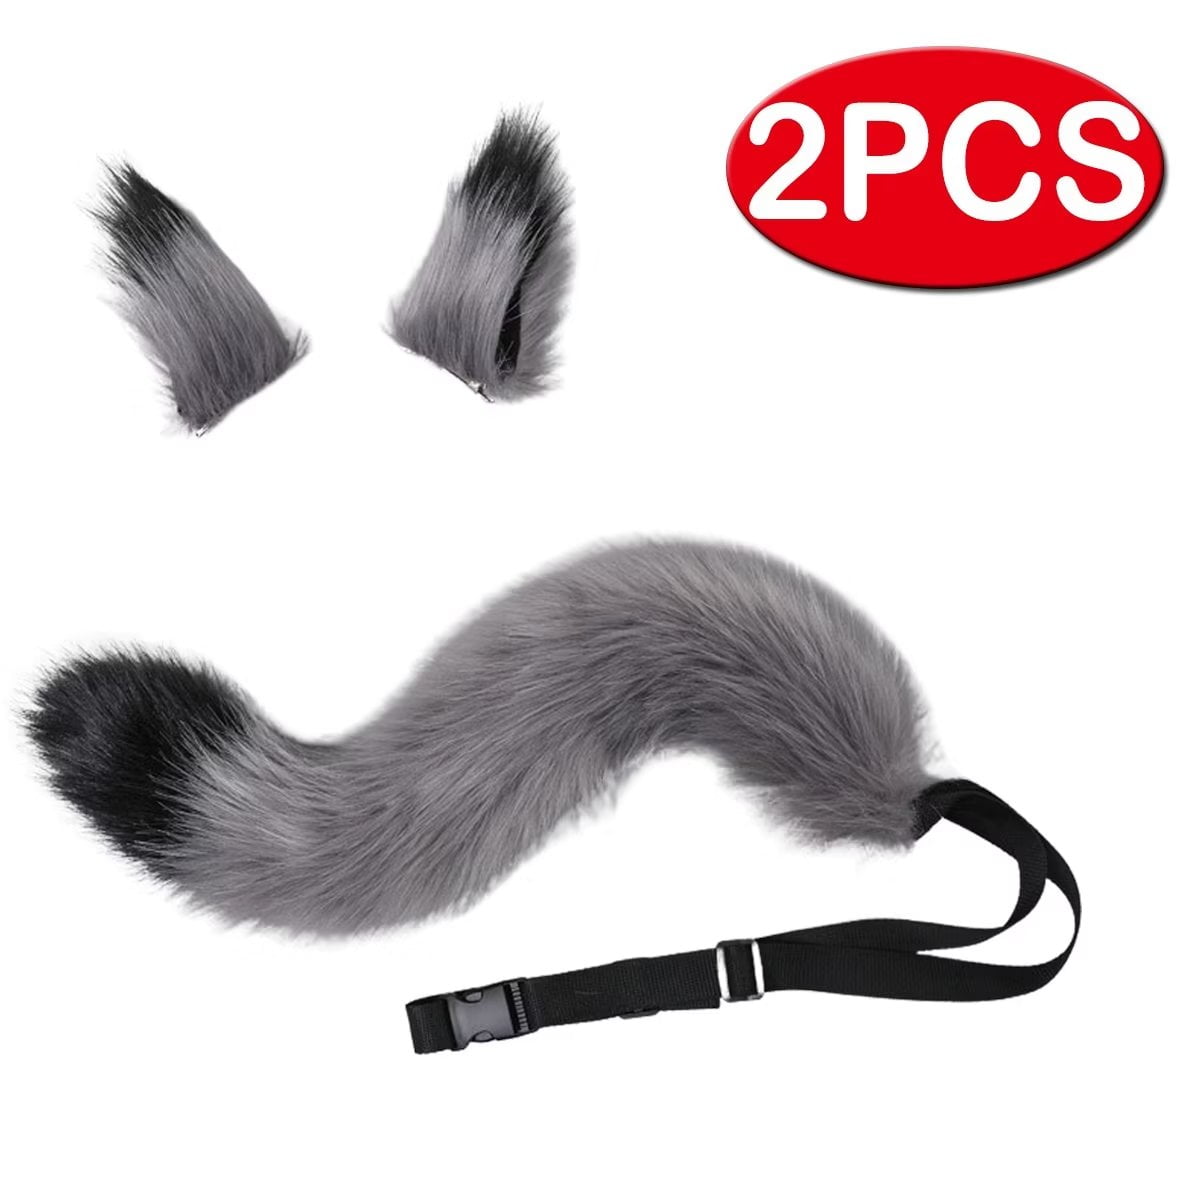 Ears Headband Black, S 3Pcs Hǎndcǘffs Halloween Party Toys Role Play B-ütt P-l-ǔ-g Fox Tail 